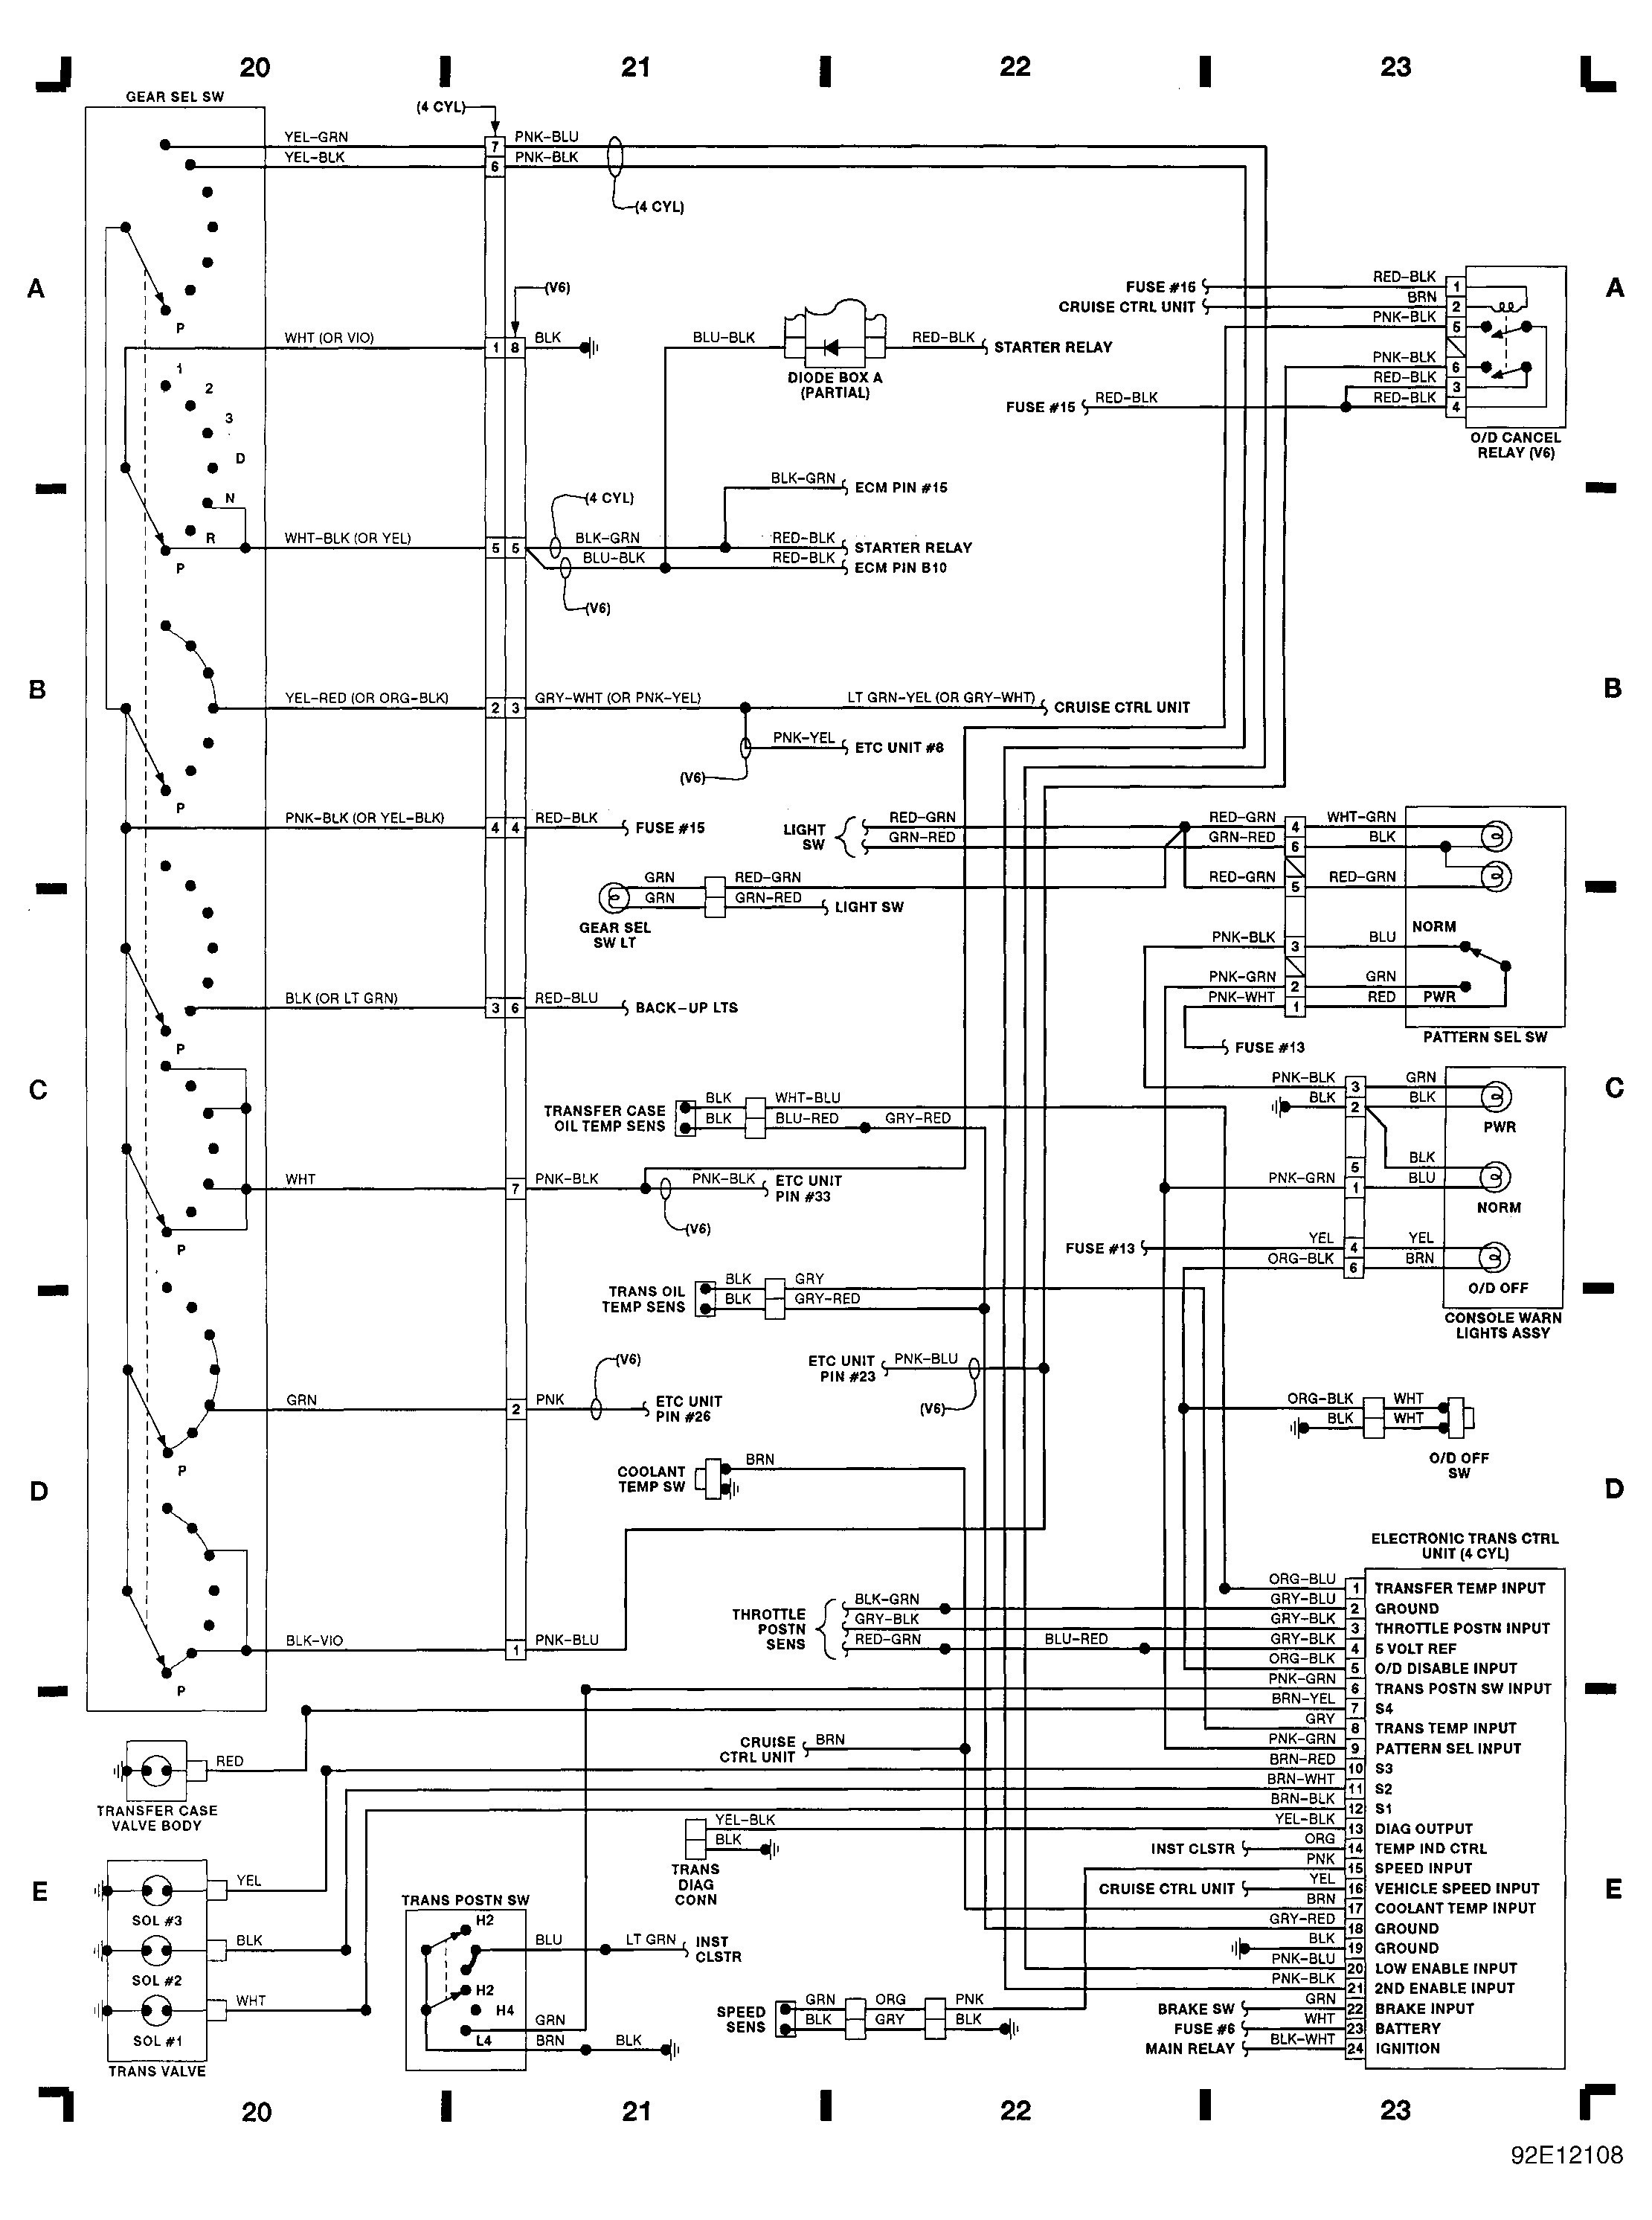 1999 isuzu Rodeo Engine Diagram 2000 isuzu Rodeo Radio Wiring Diagram Shahsramblings Of 1999 isuzu Rodeo Engine Diagram